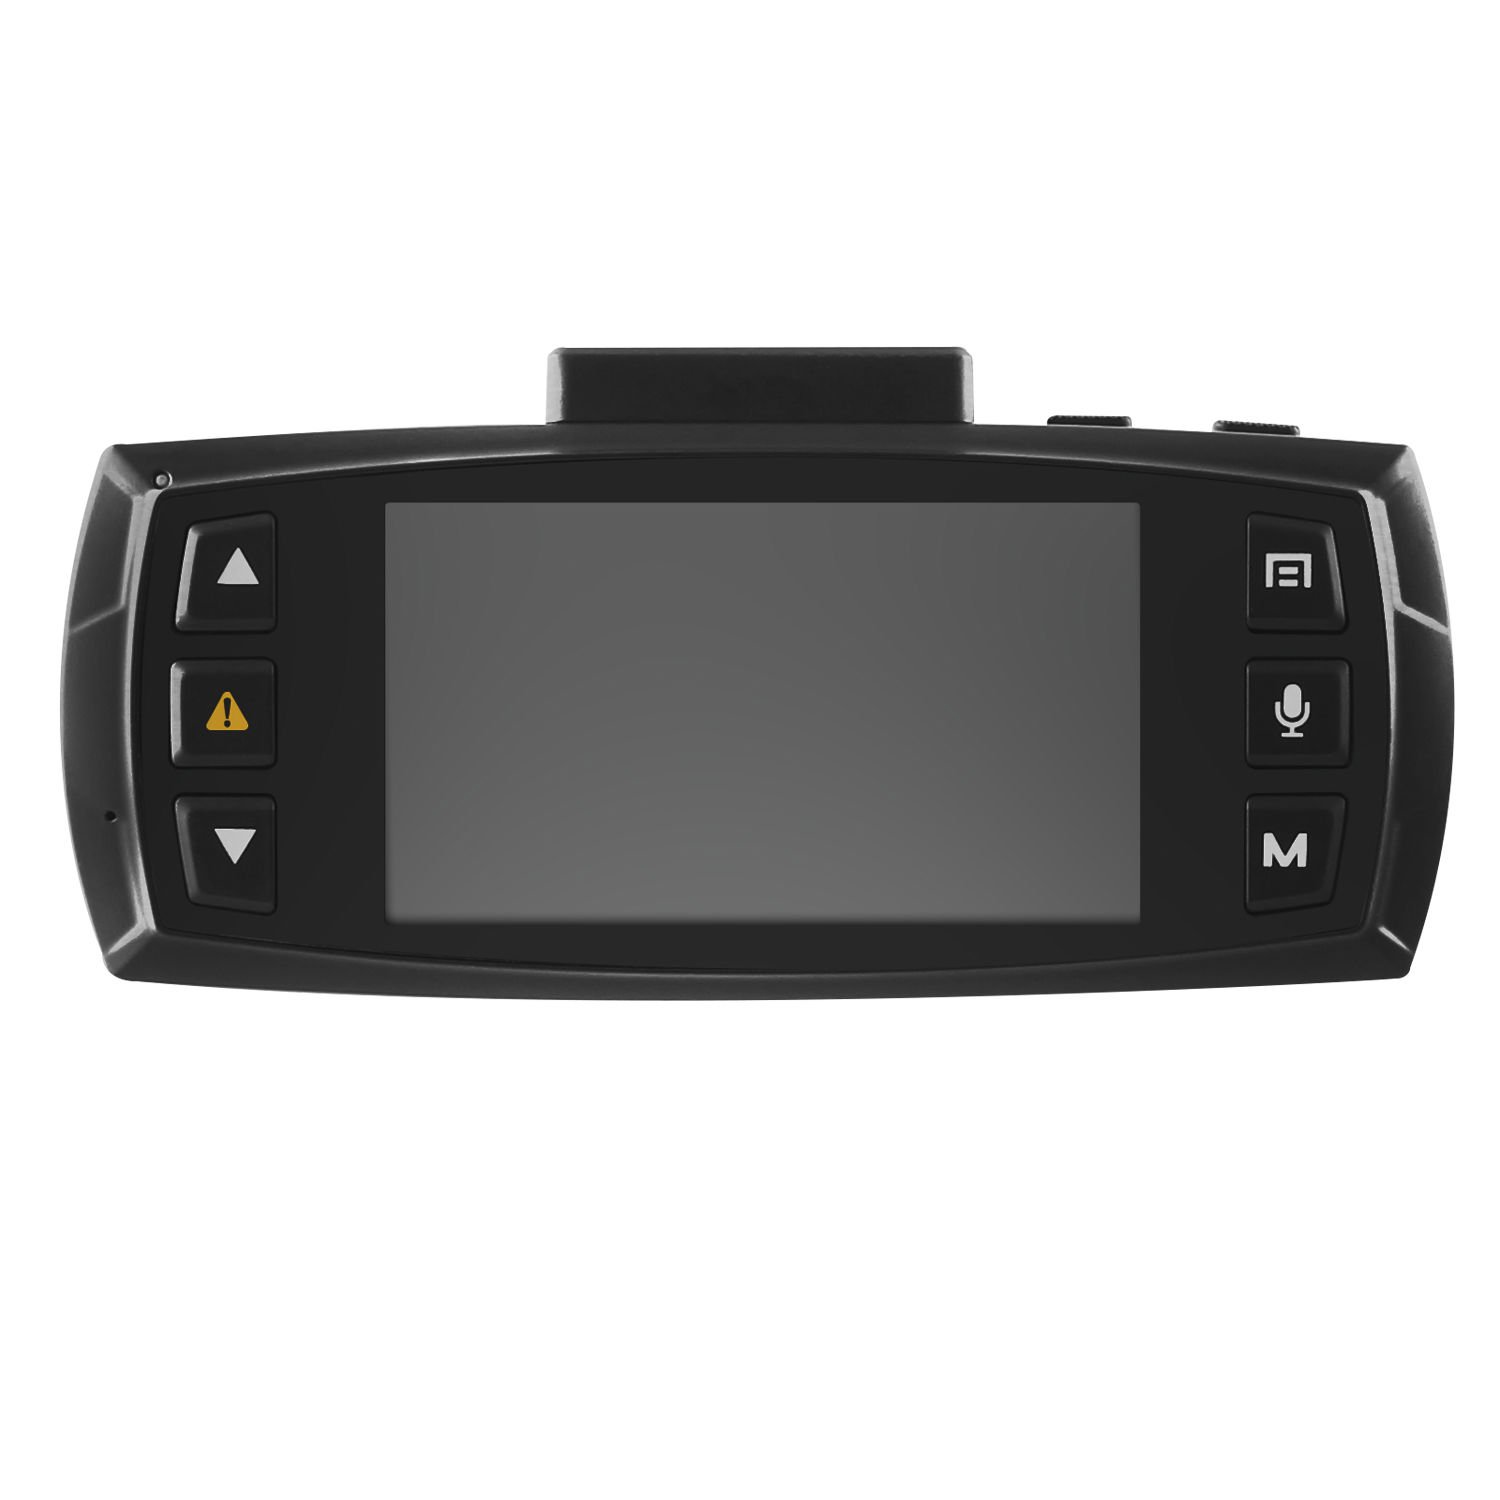 Dod-Tech Dashcam LS370W 2.7" LCD